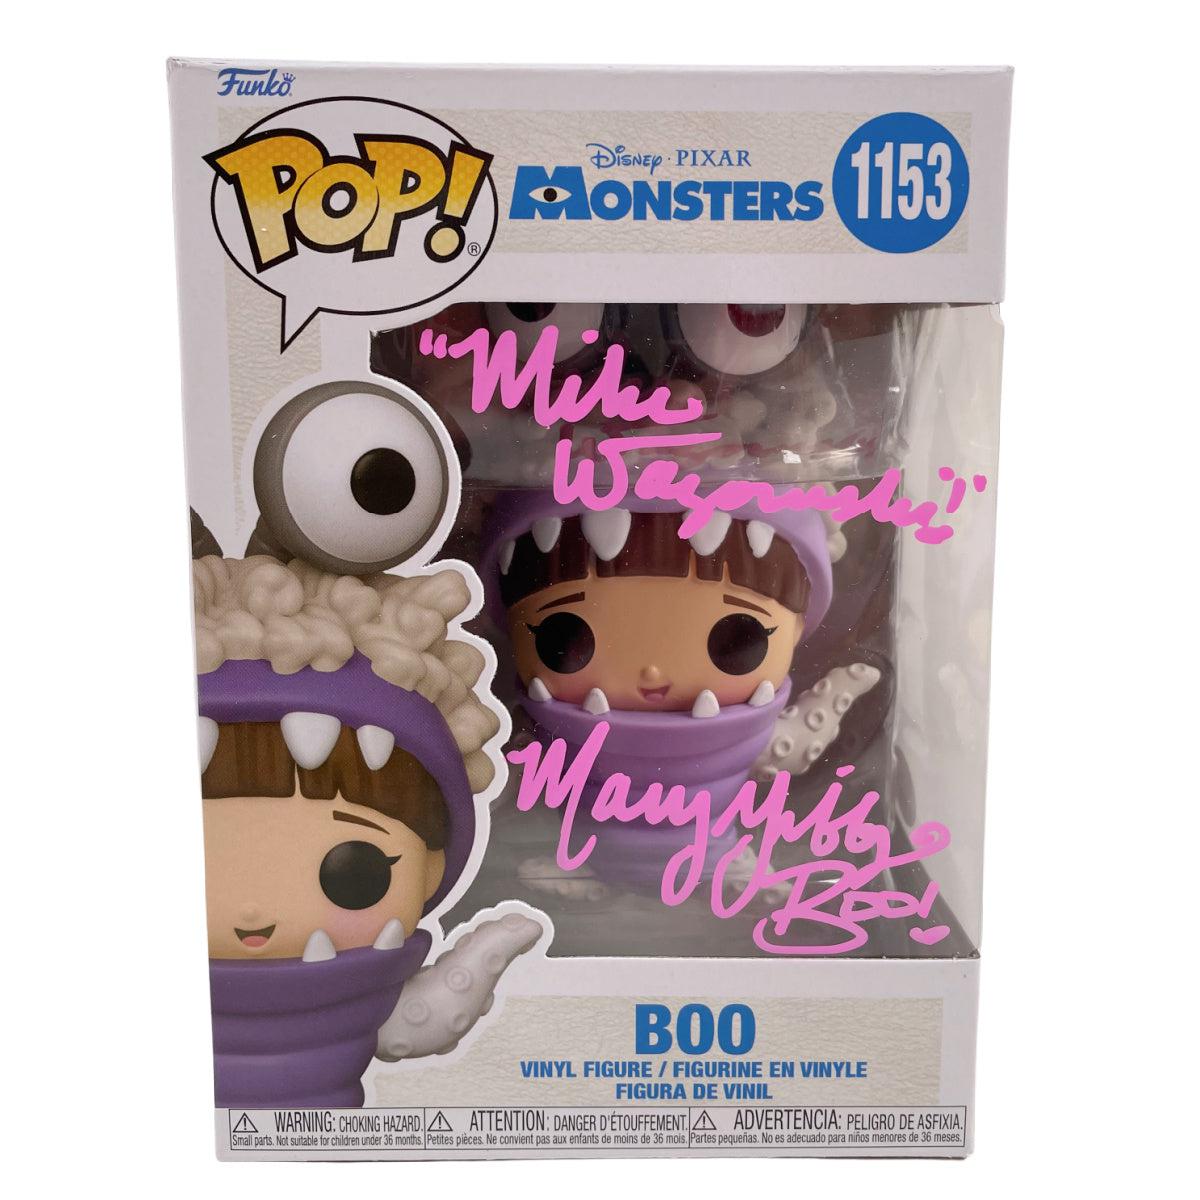 Mary Gibbs Signed Funko POP Disney Pixar Monsters 1153 Boo Autographed JSA 2